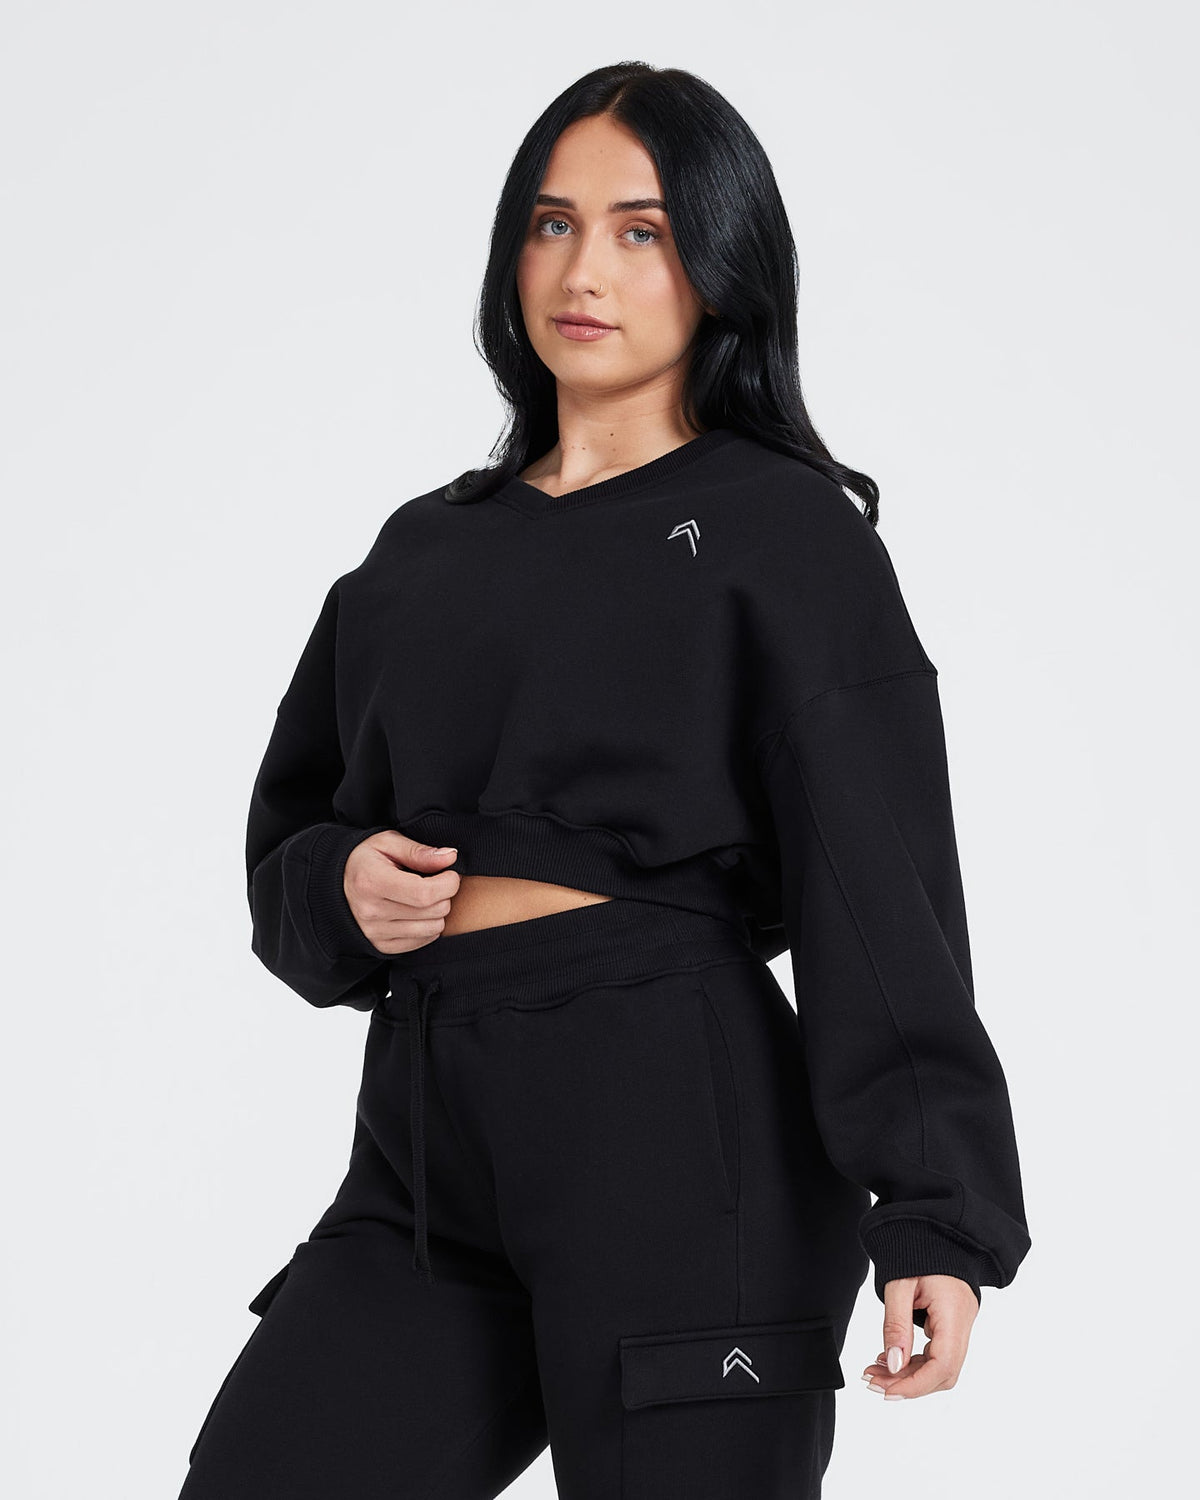 Black V-Neck Sweatshirt Women's - Oversized